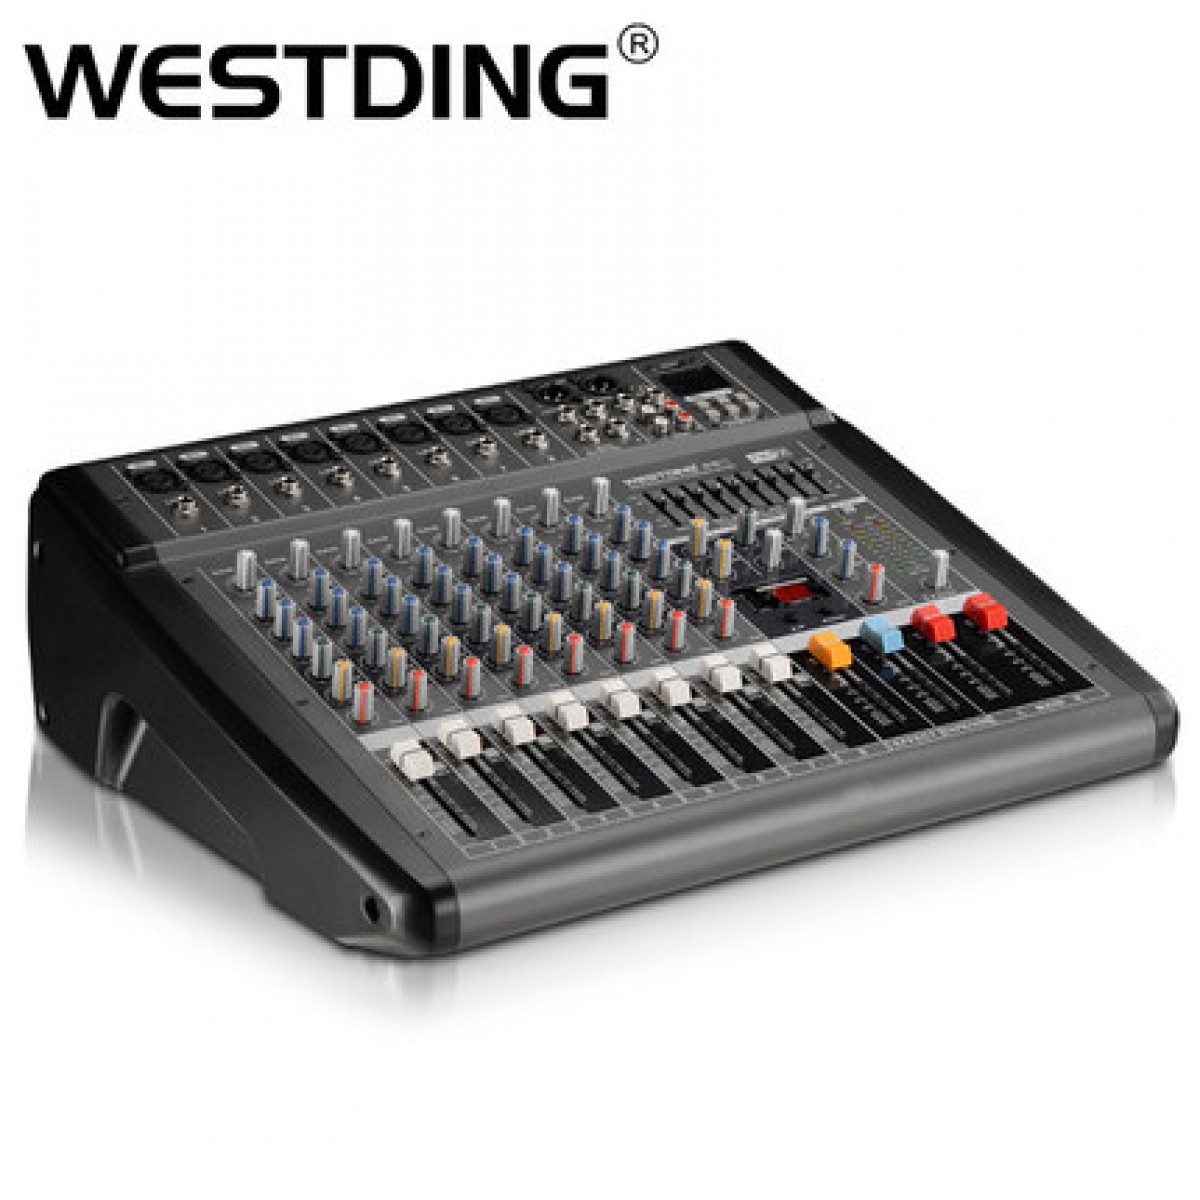 WESTDING/威斯汀 PM8FX 专业舞台婚庆8路调音演出设备 调音台带功放一体机大功率 带效果